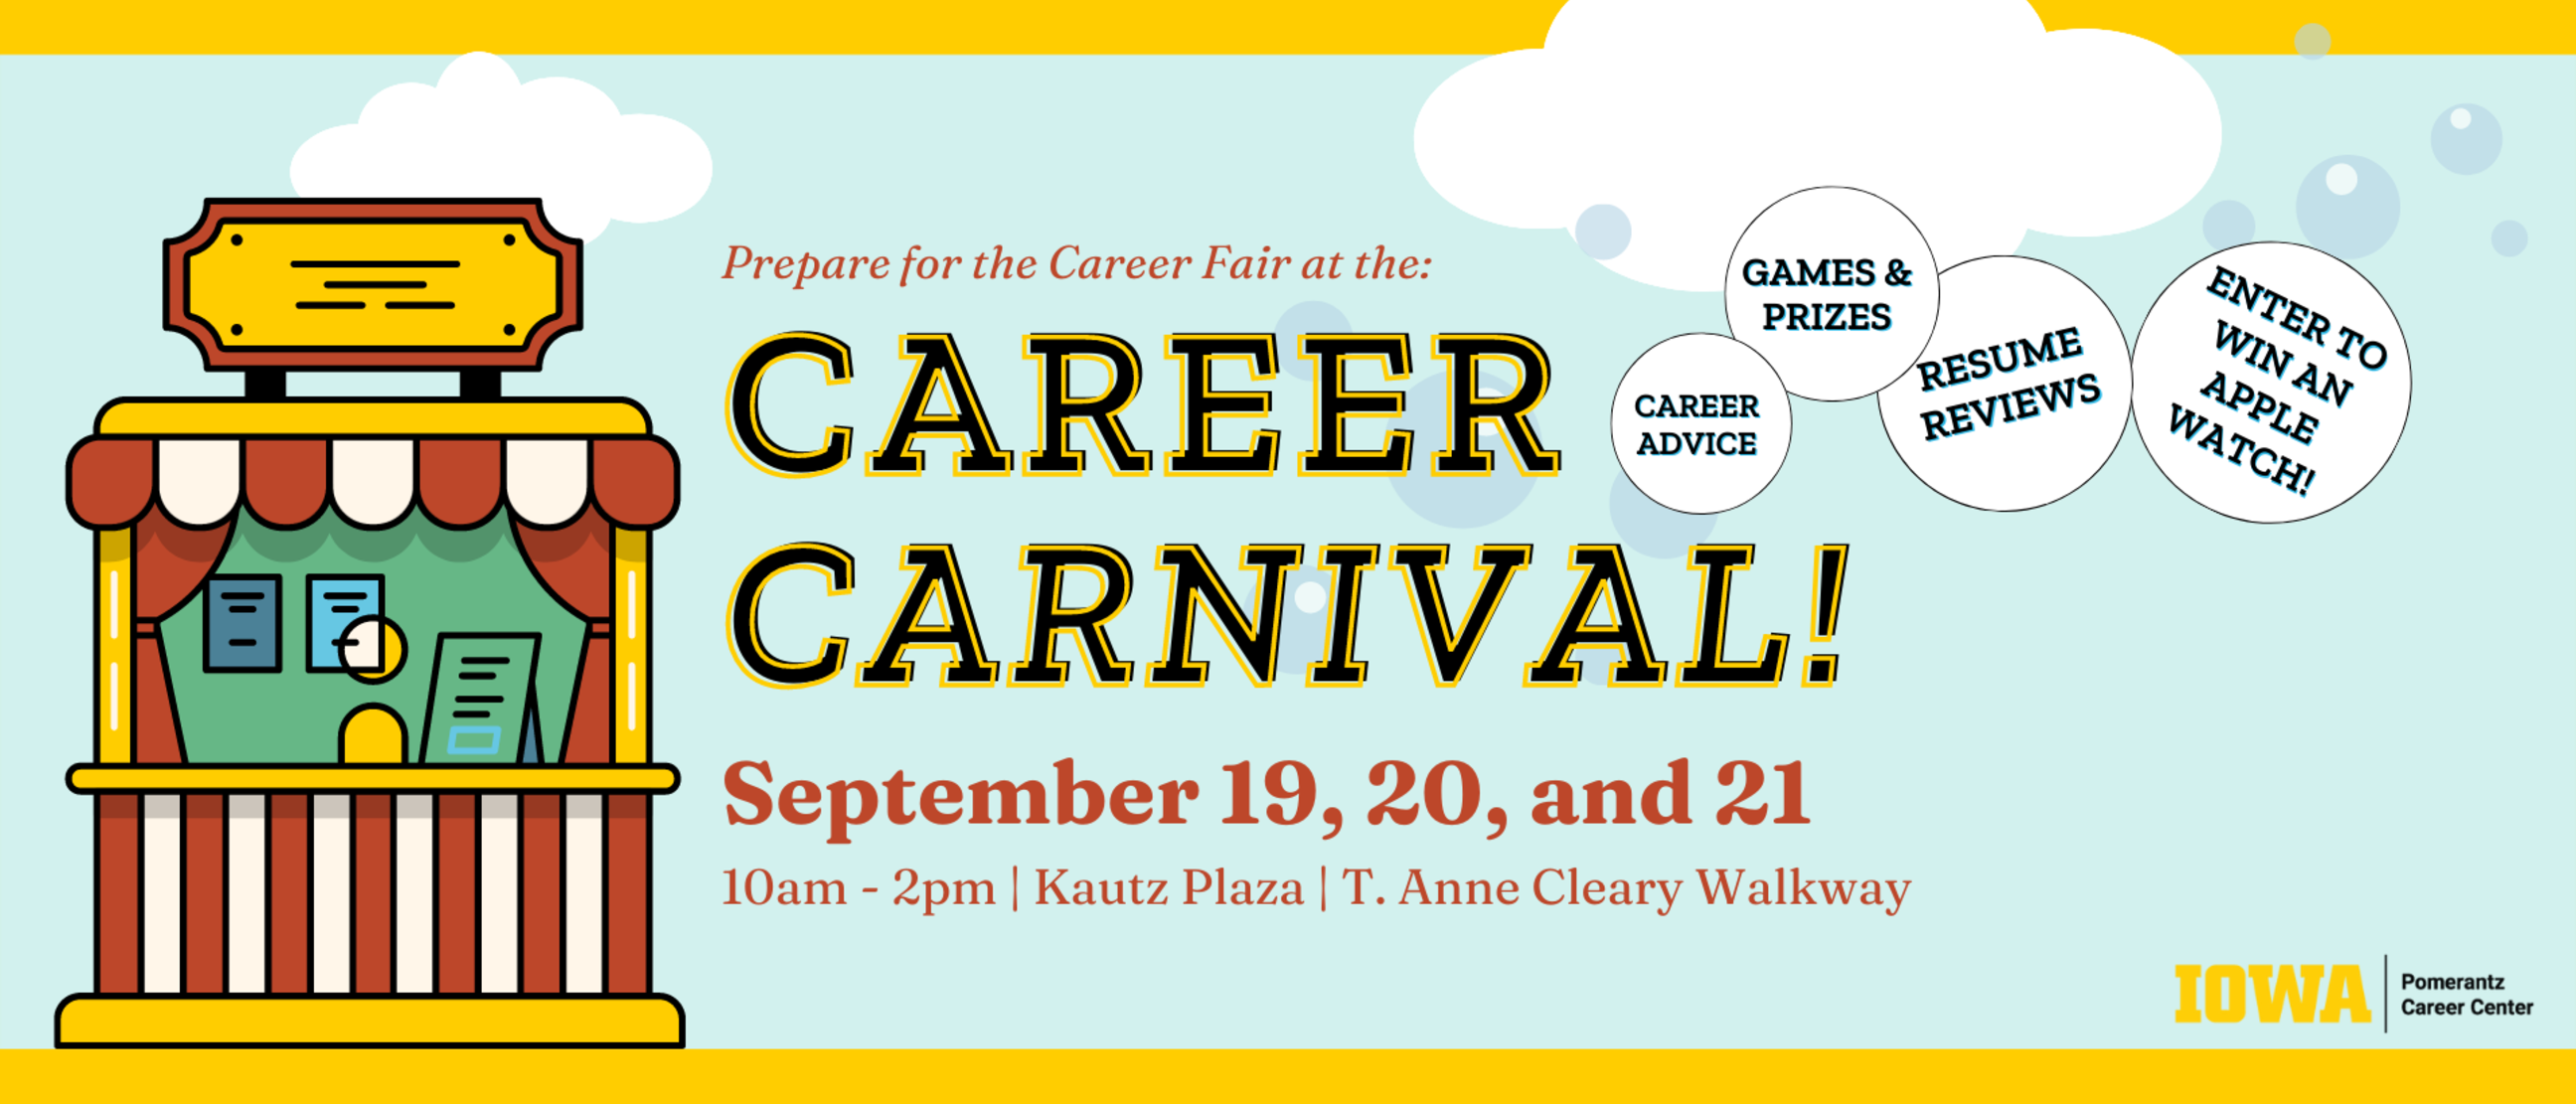 Prepare for the Career Fair at Career Carnival! Pomerantz Career